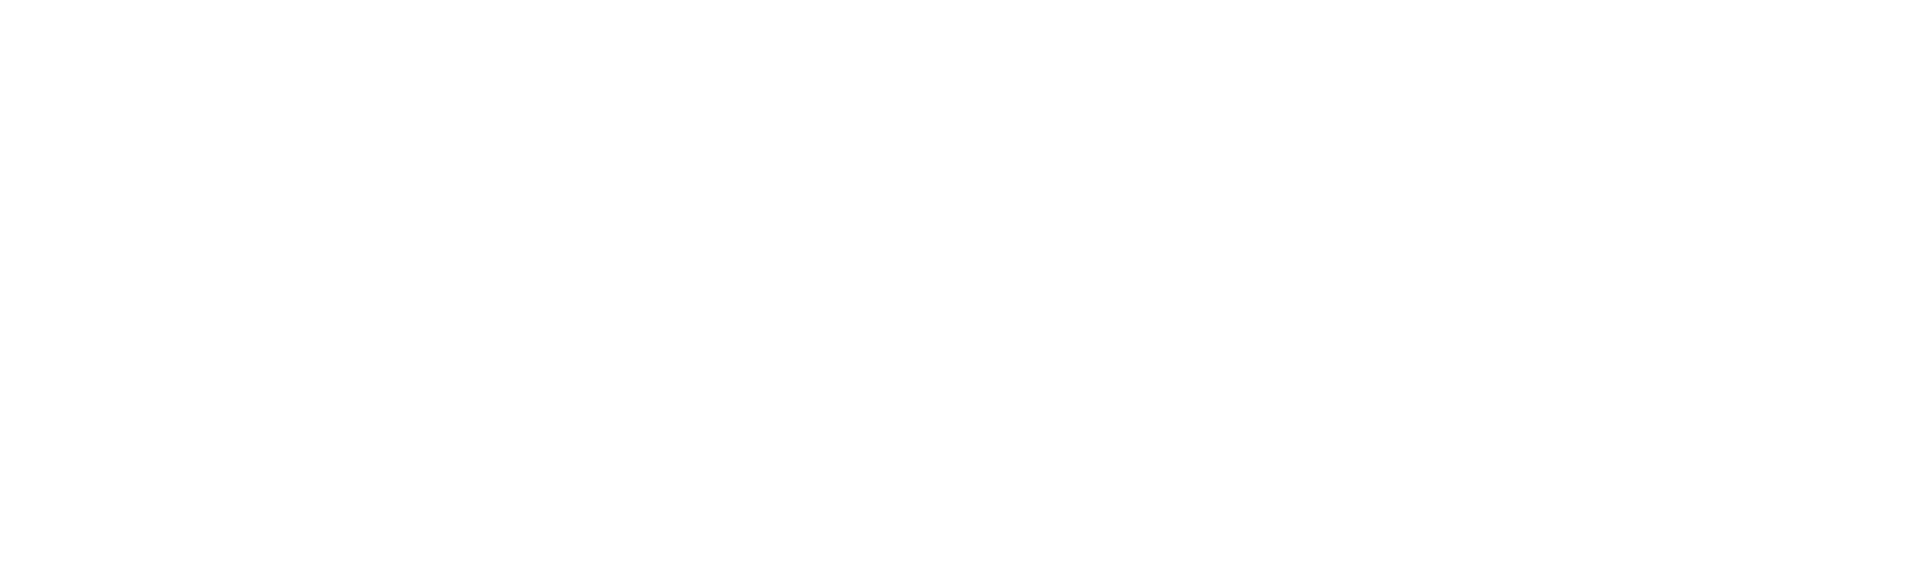 Can Casinos Logo large